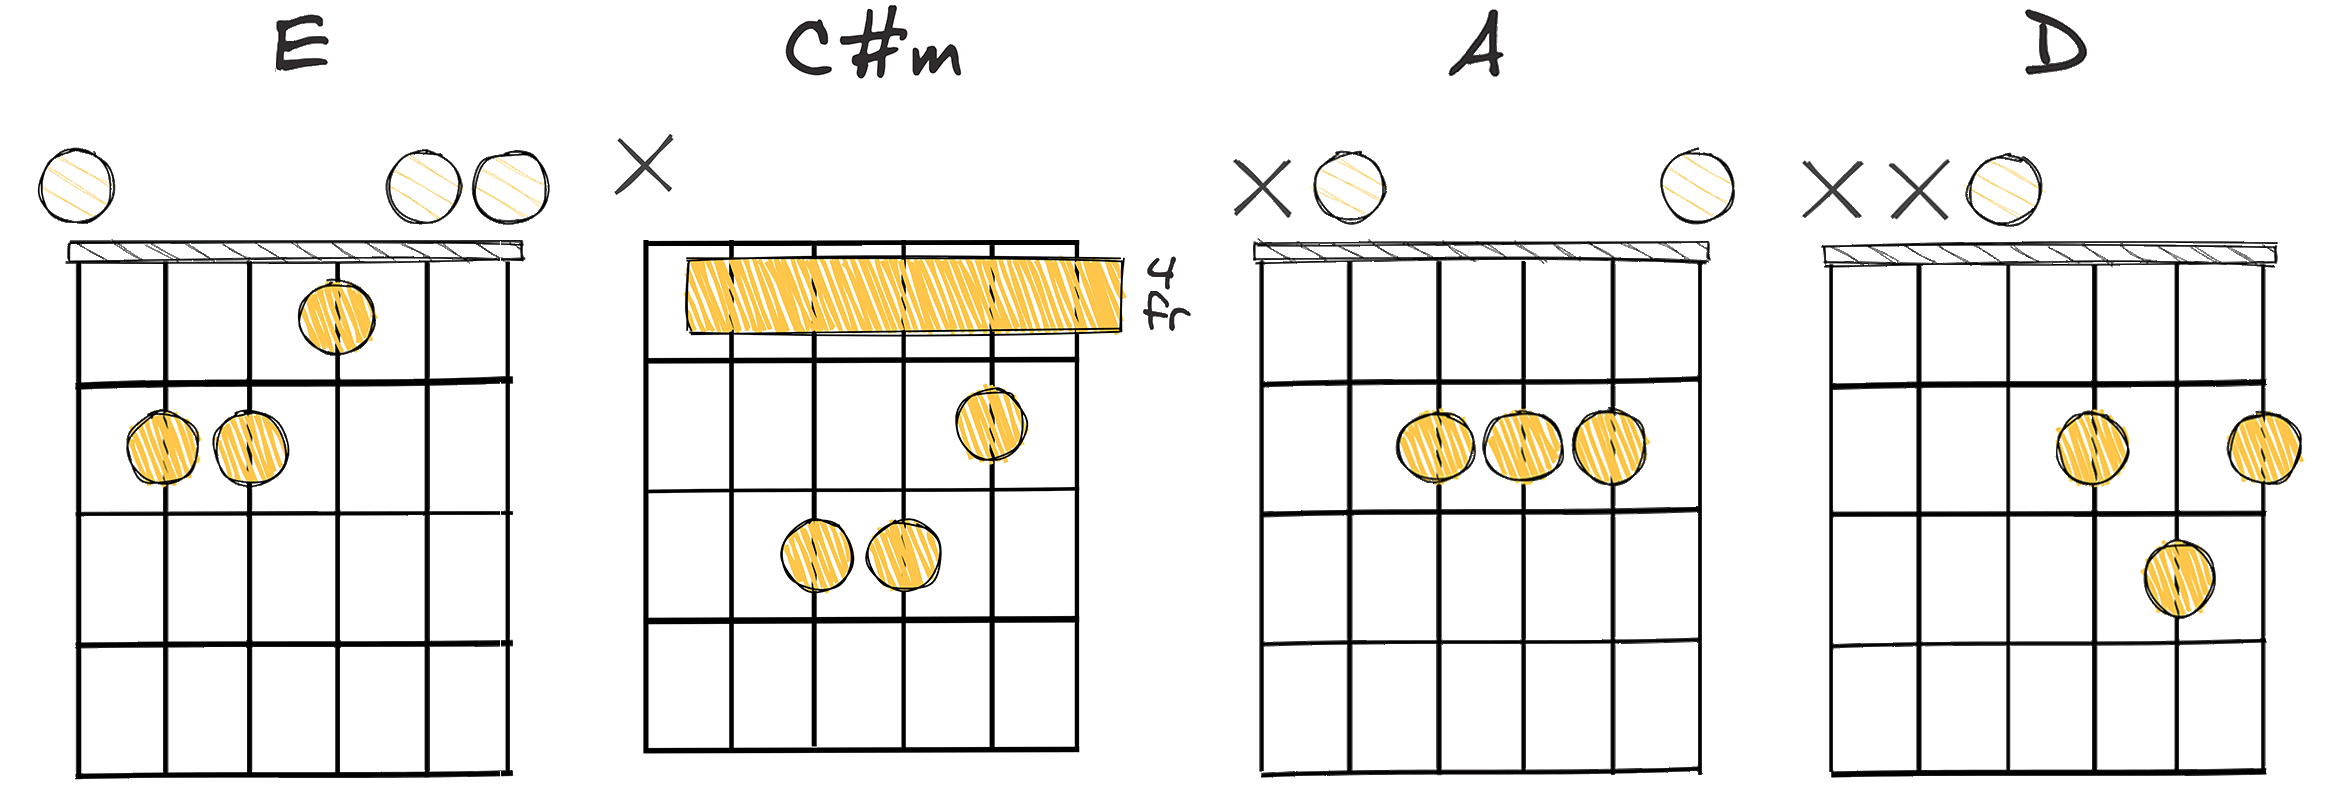 i-vi-IV-VII (1-6-4-7) chords diagram